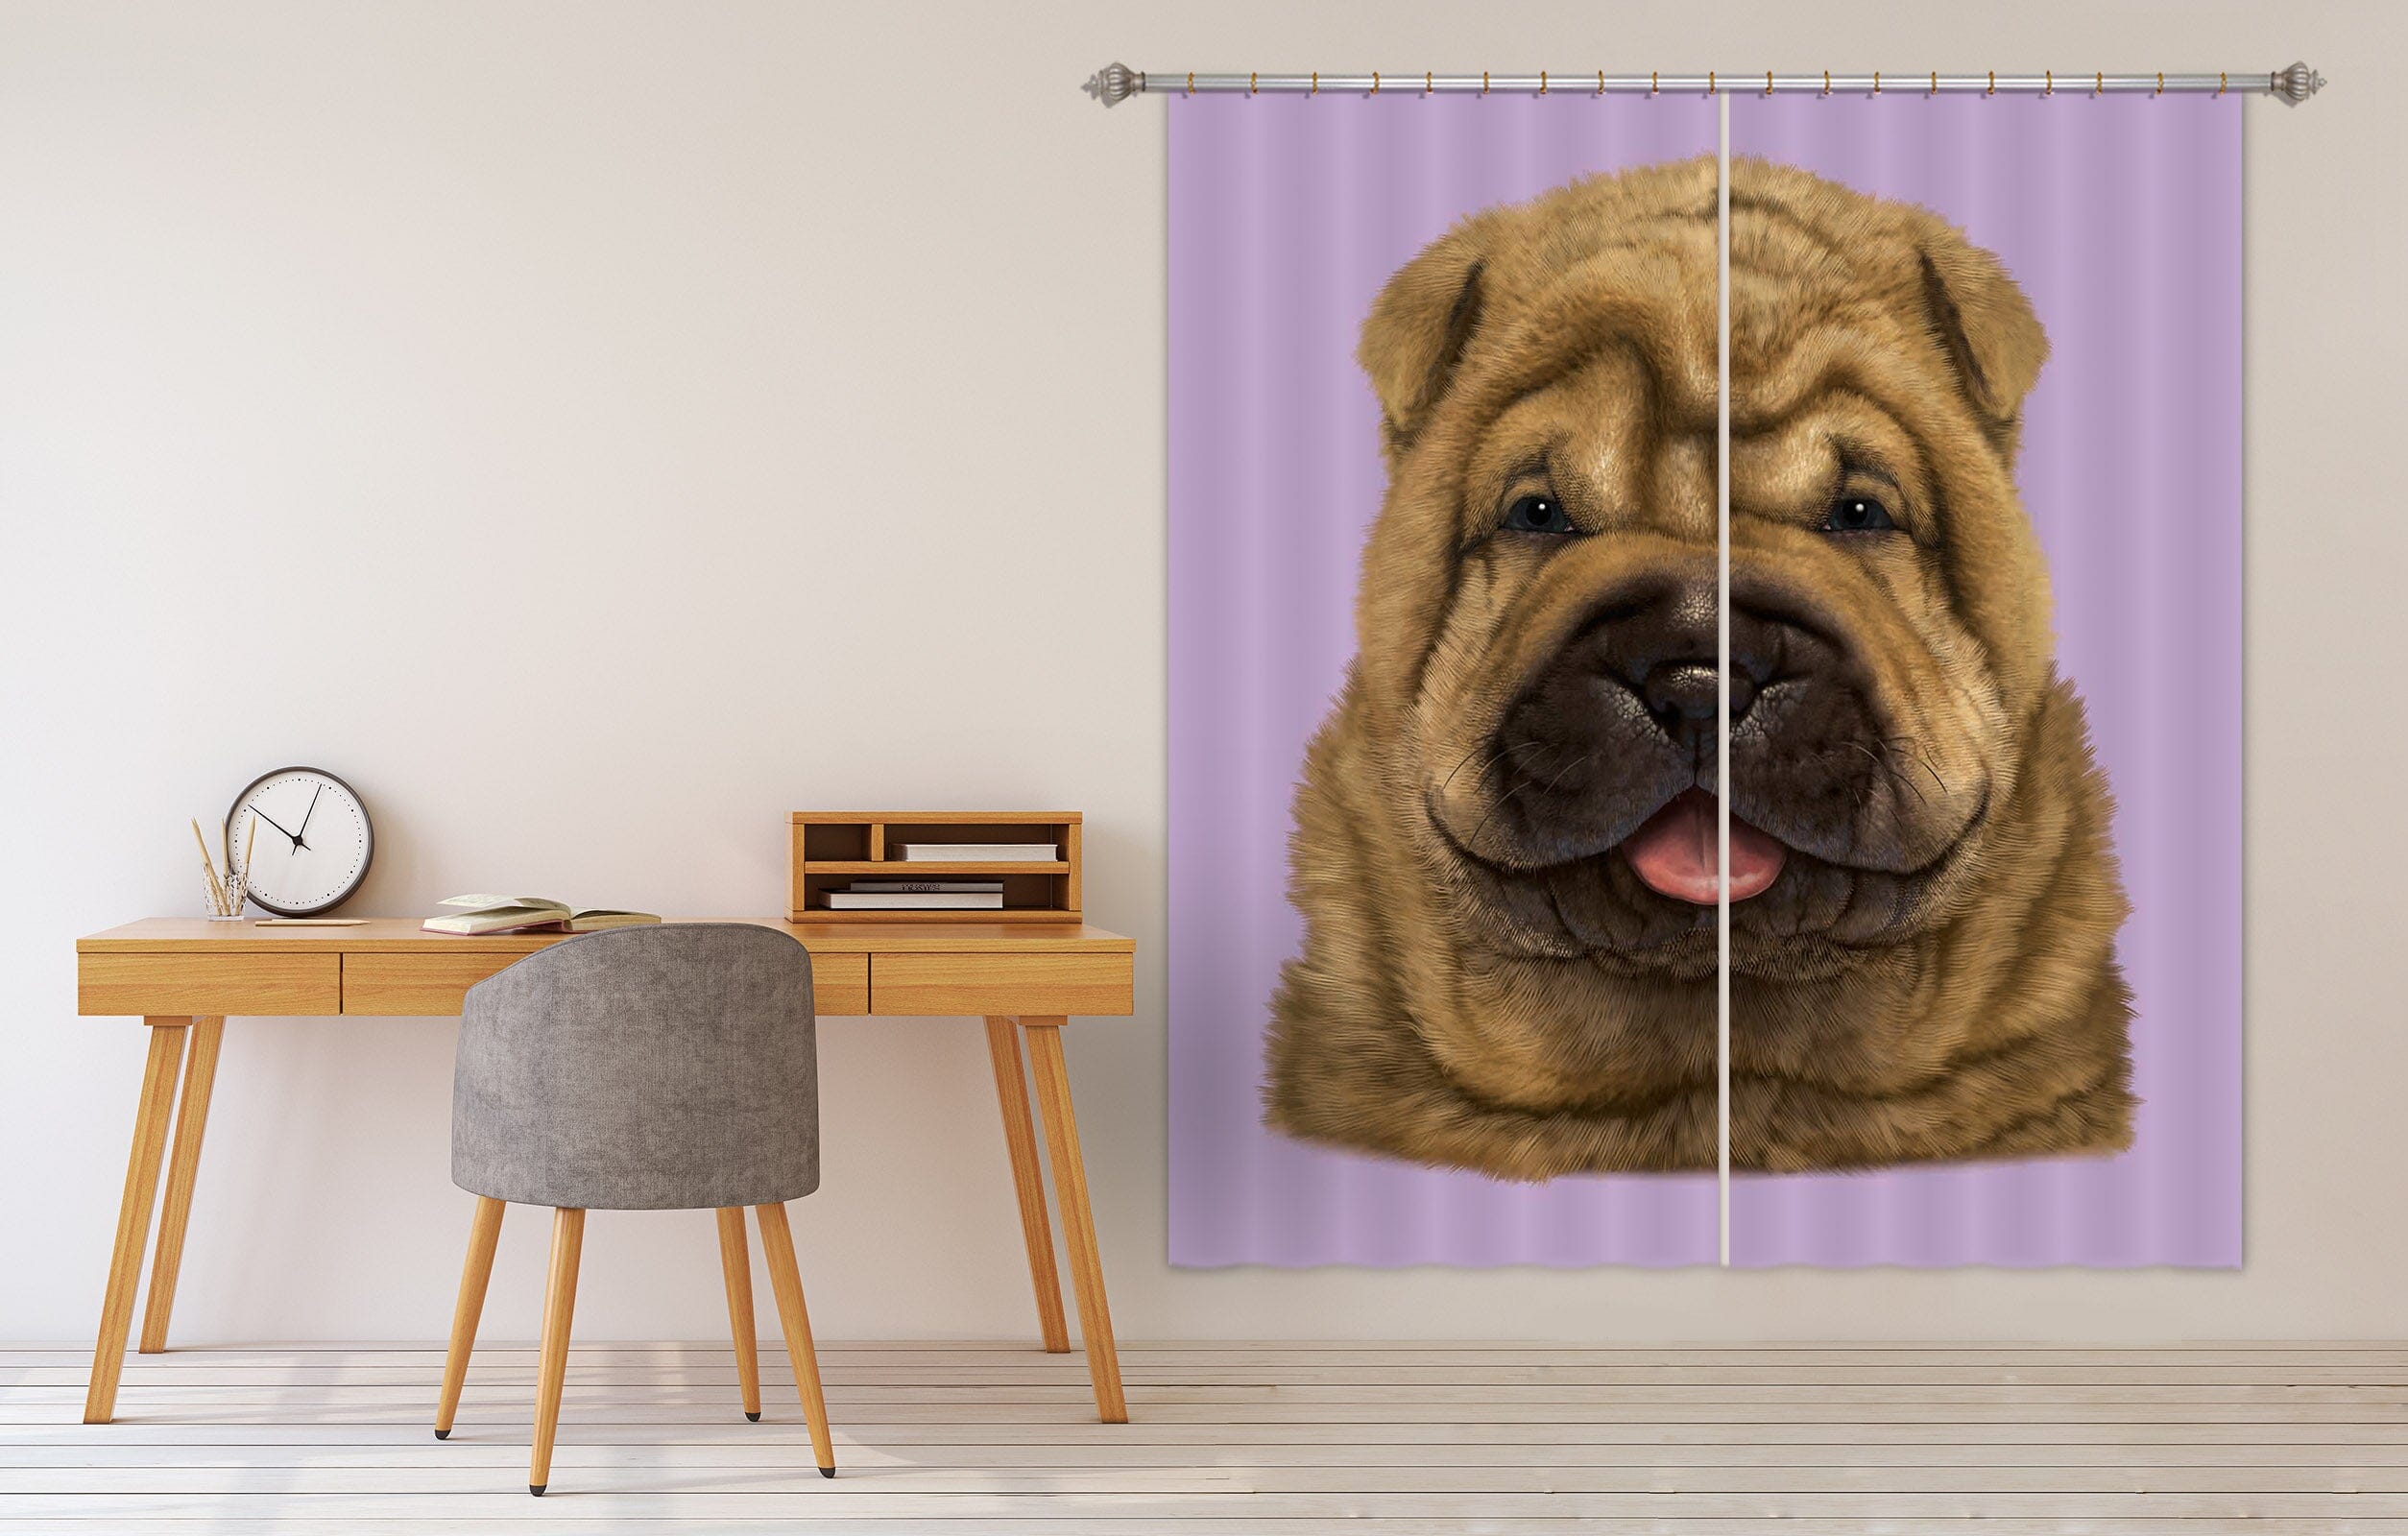 3D Shar Pei Puppy Portrait 069 Vincent Hie Curtain Curtains Drapes Curtains AJ Creativity Home 